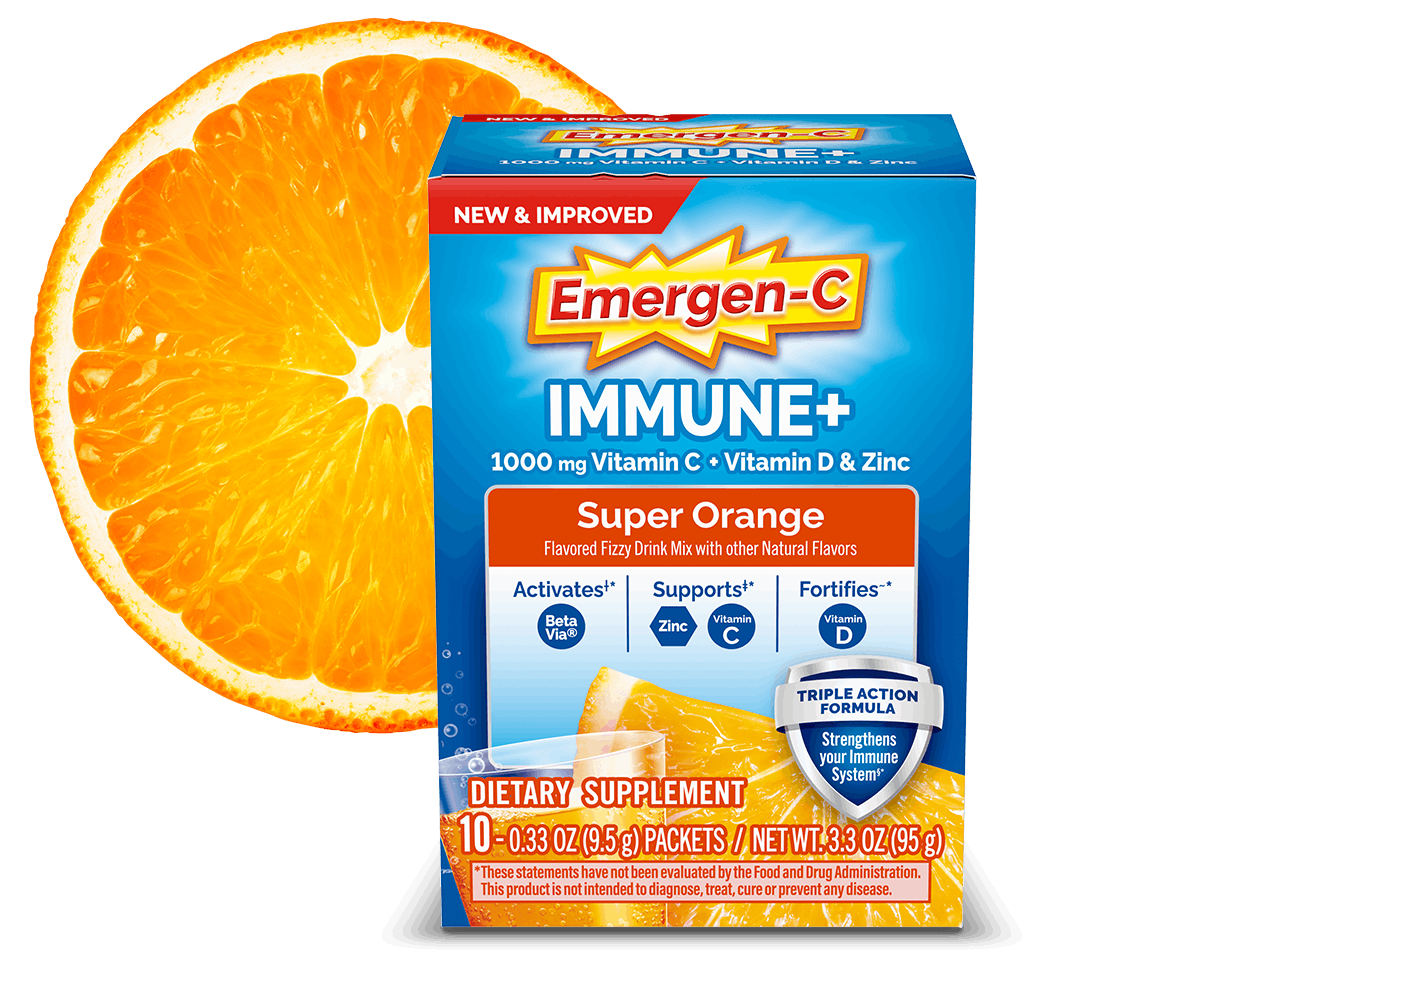 Emergen-C Immune+ Super Orange with Triple Action product